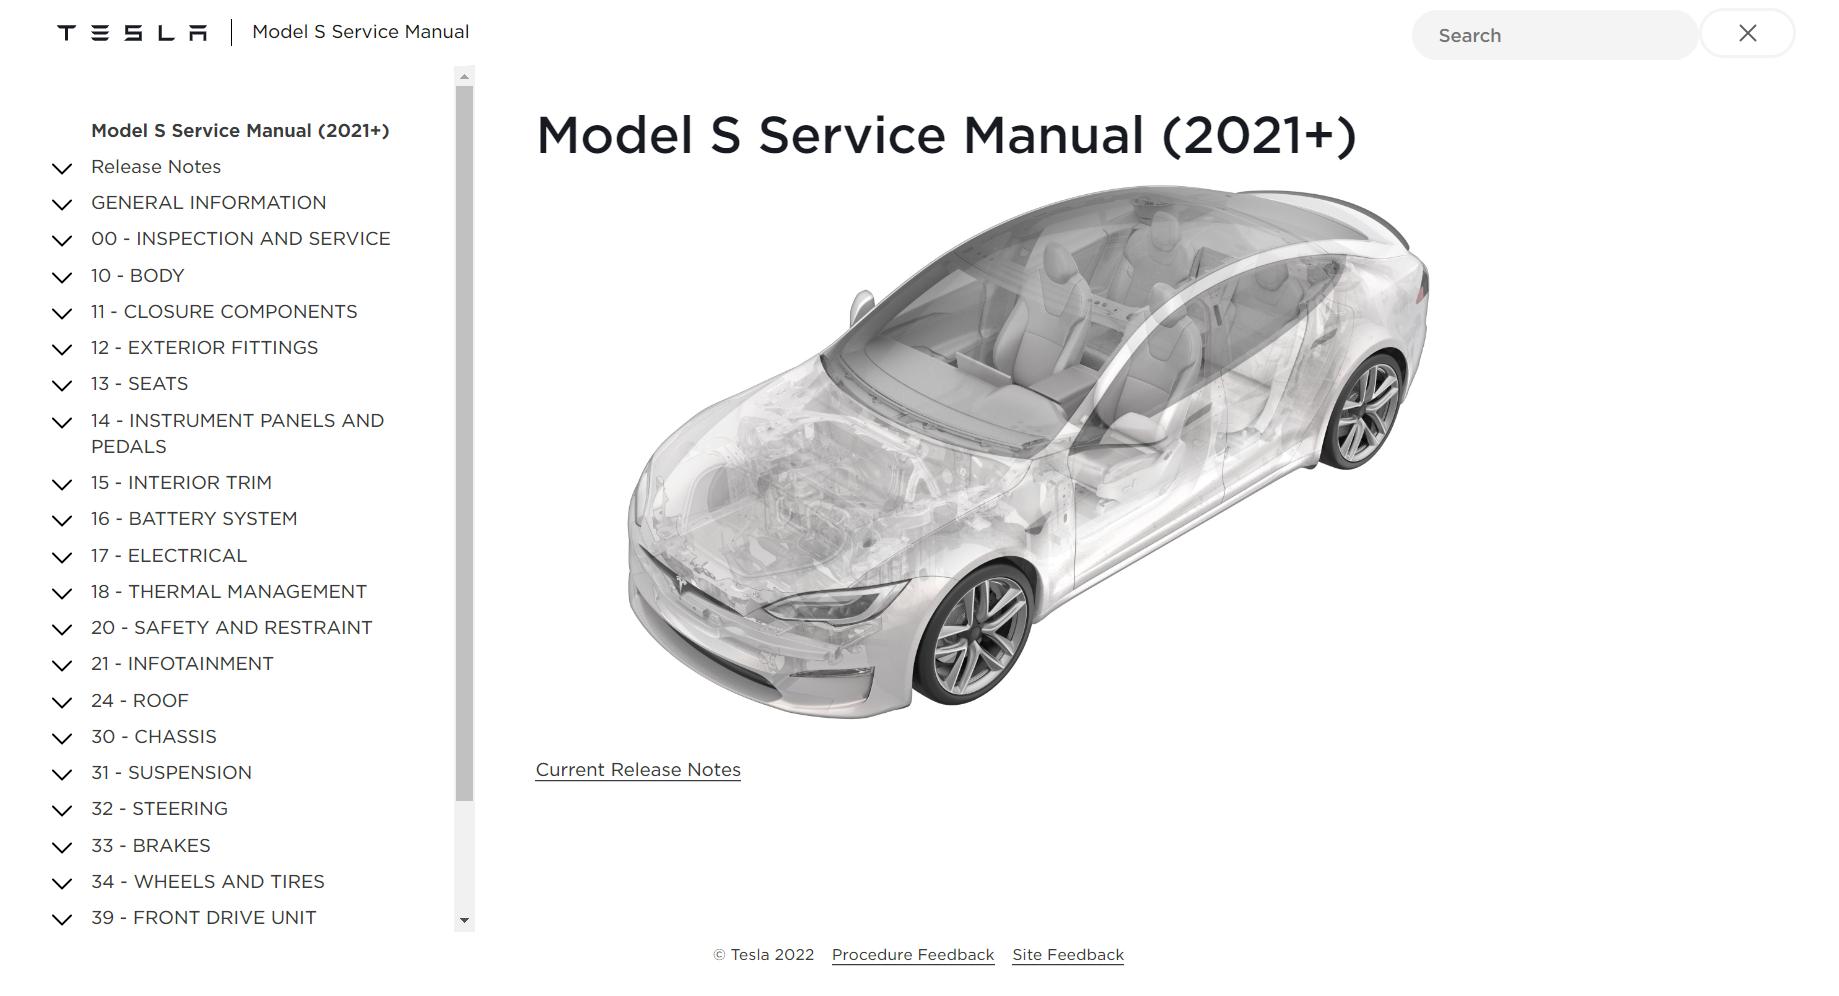 Tesla Model S Service Manual